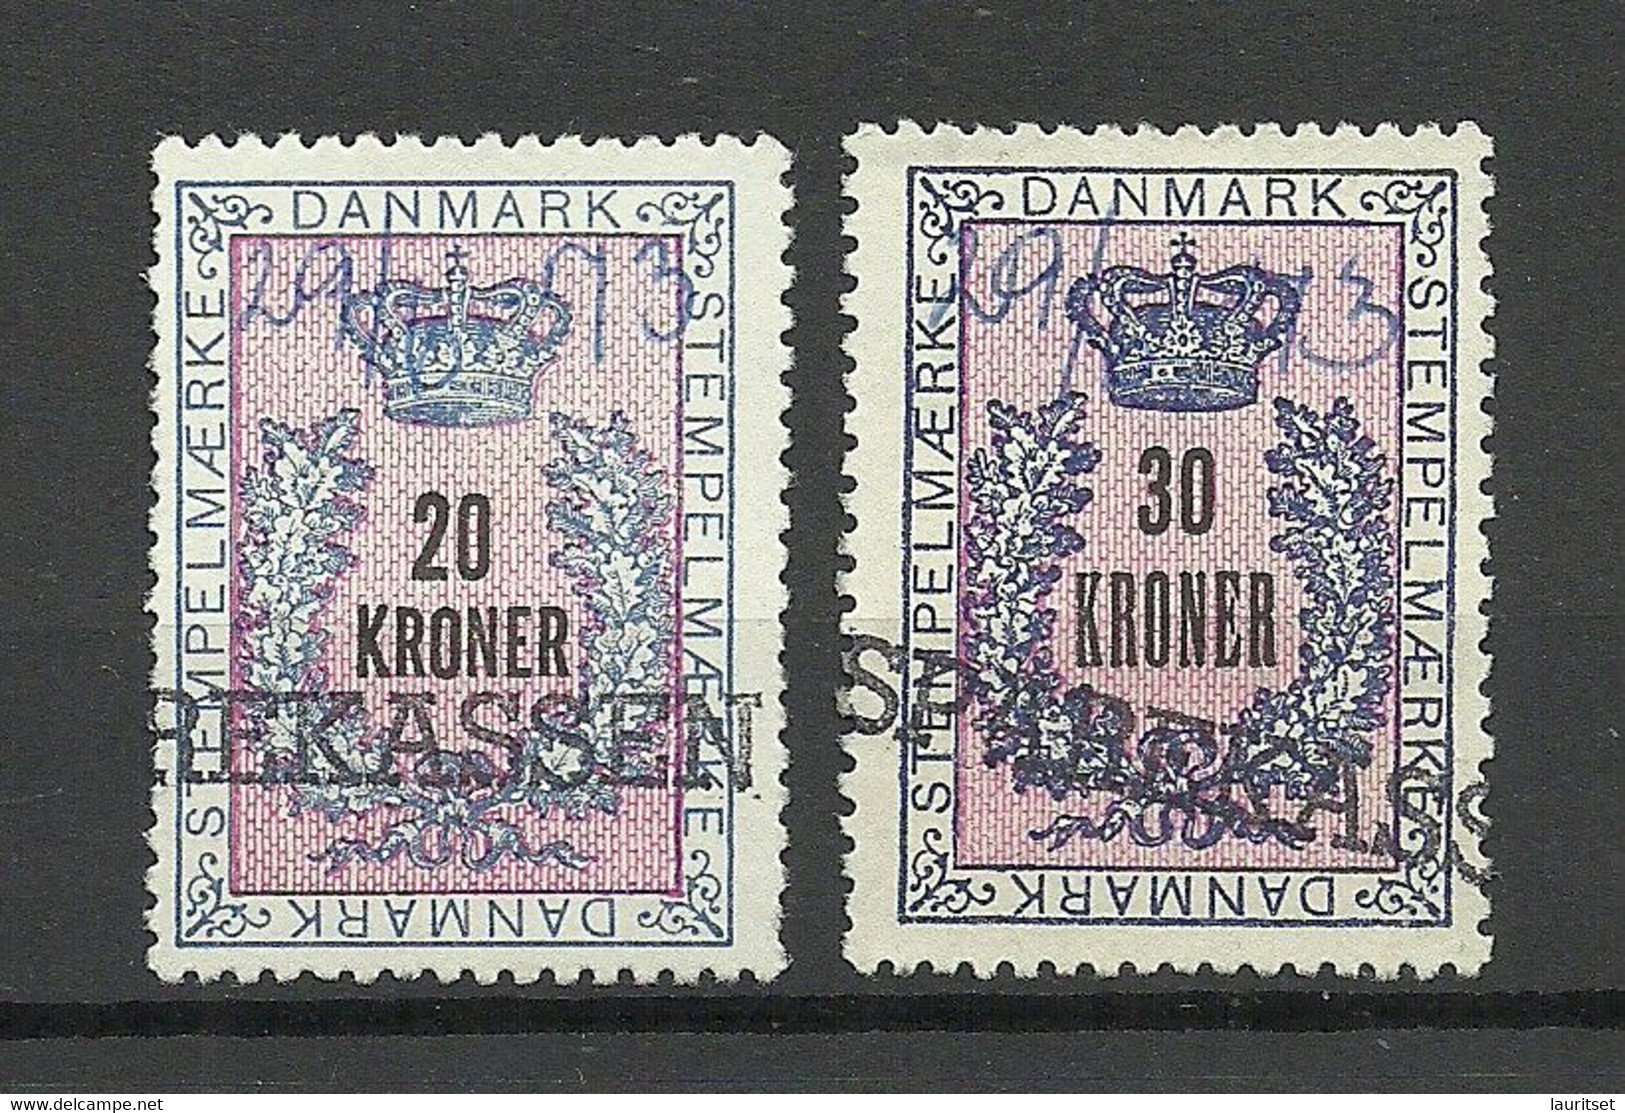 DENMARK Dänemark O 1973 Sparekassen Tax Stempelmarken Documentary Taxe Revenue Samps - Fiscali